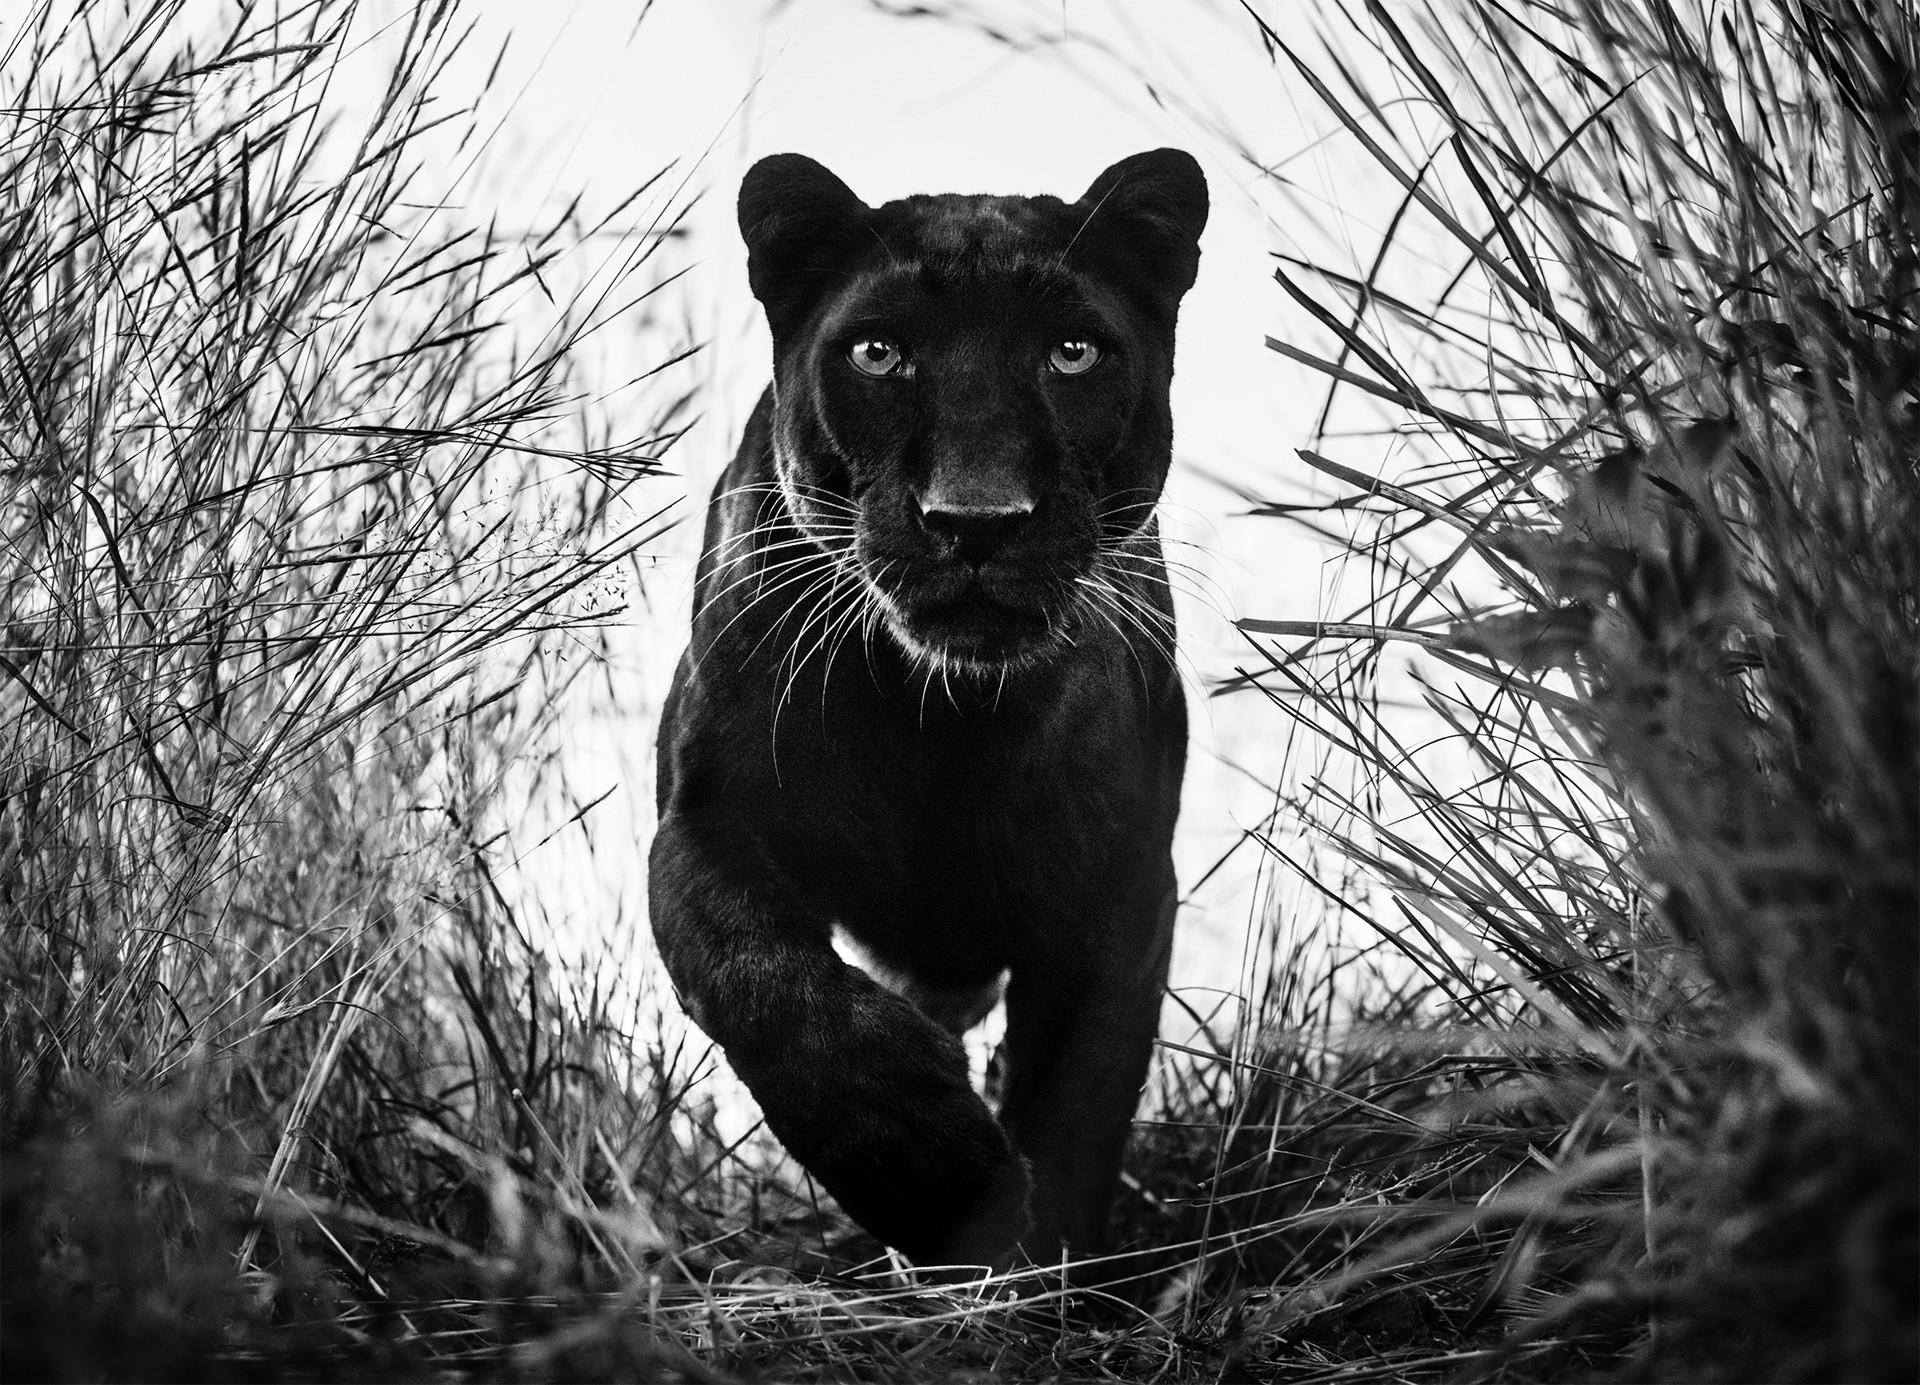 Black Panther by David Yarrow